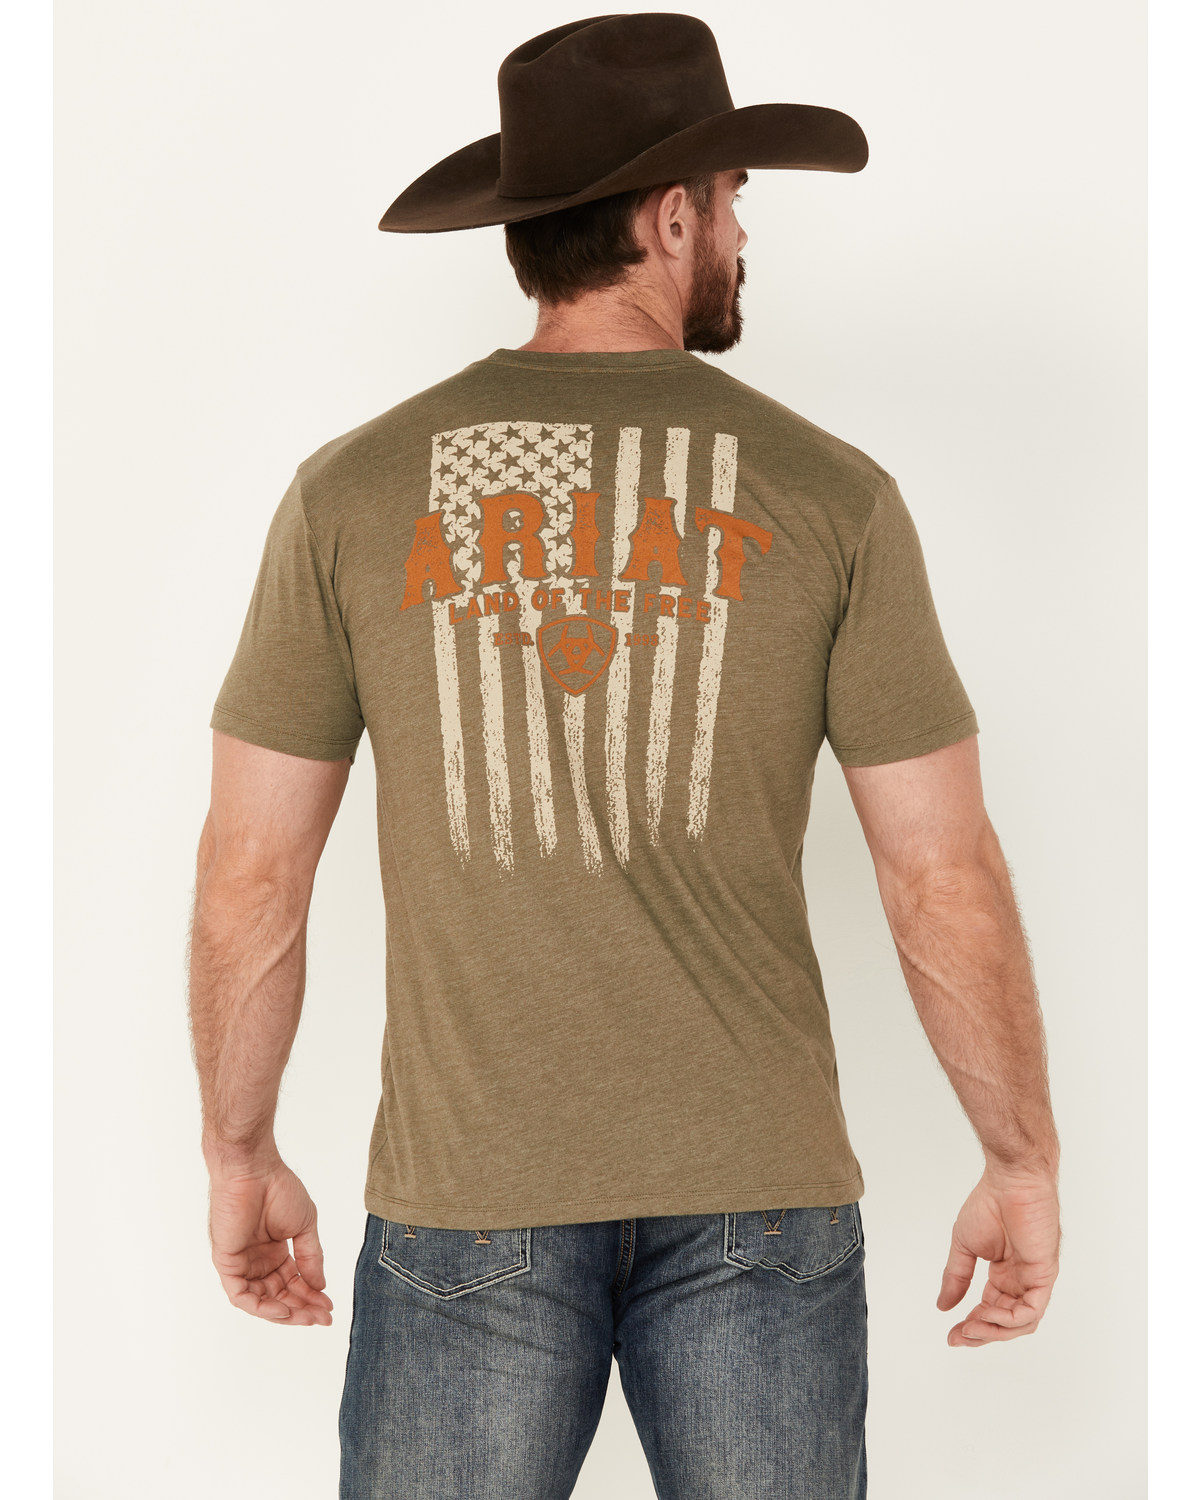 Ariat Men's Vertical Flag Short Sleeve Graphic T-Shirt